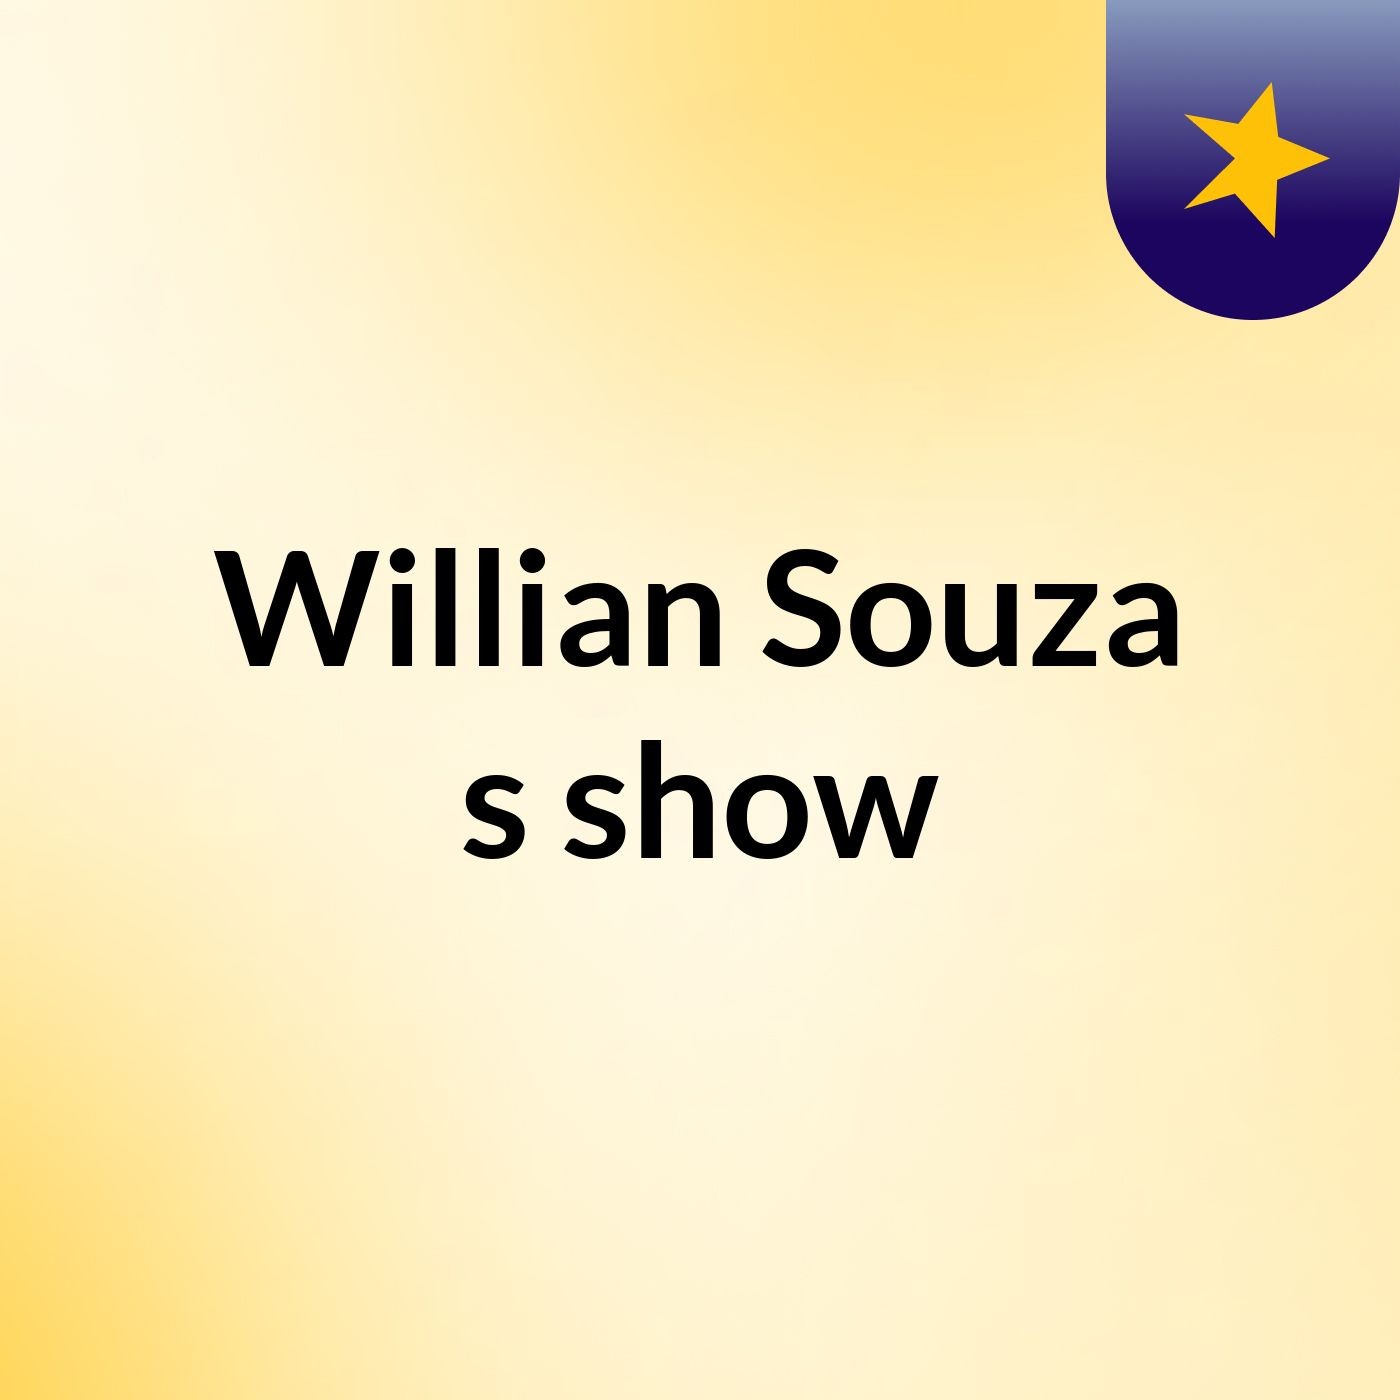 Willian Souza's show